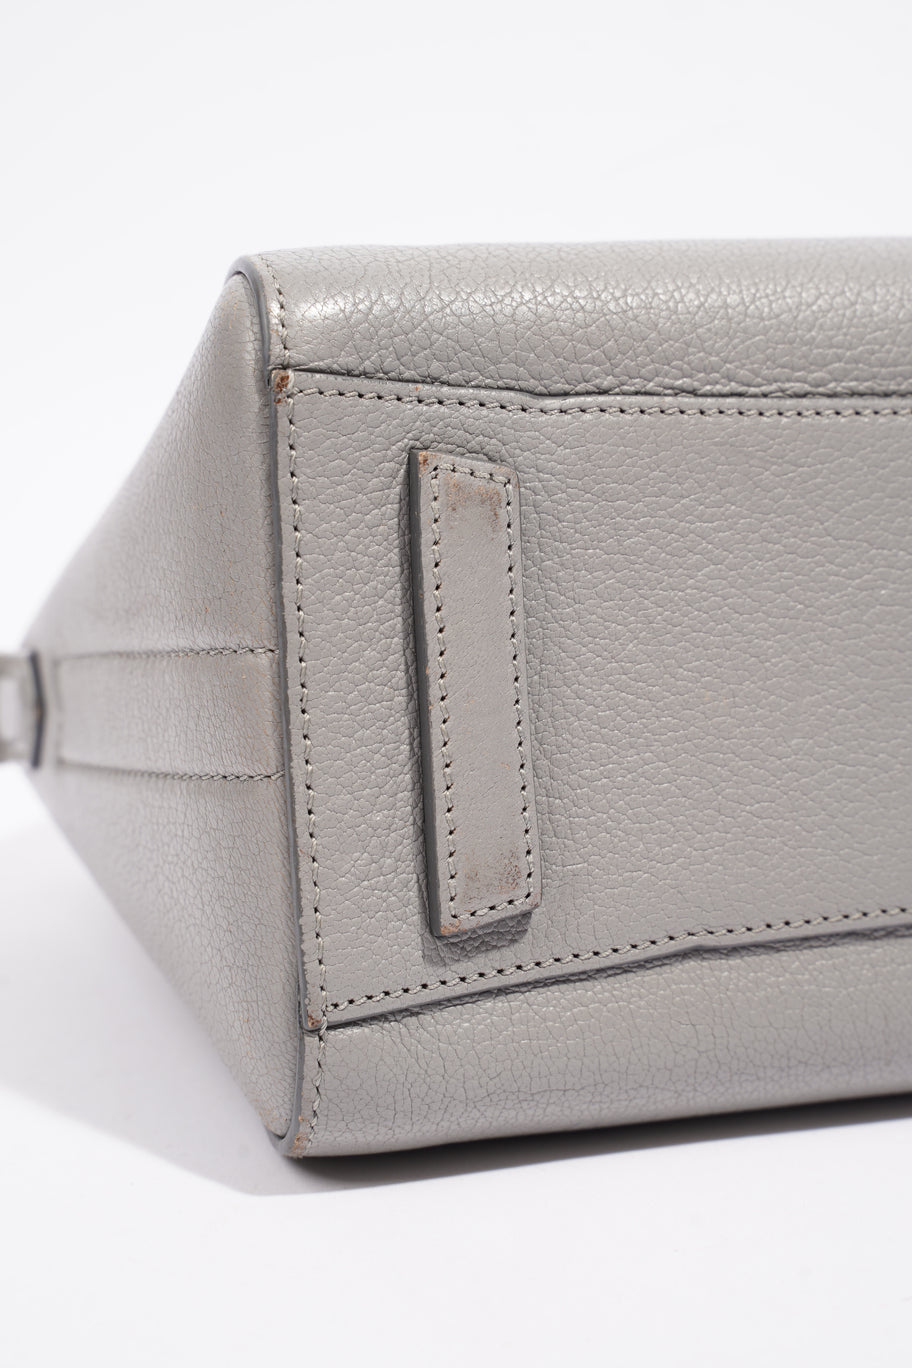 Mini Antigona Grey Grained Leather Image 12